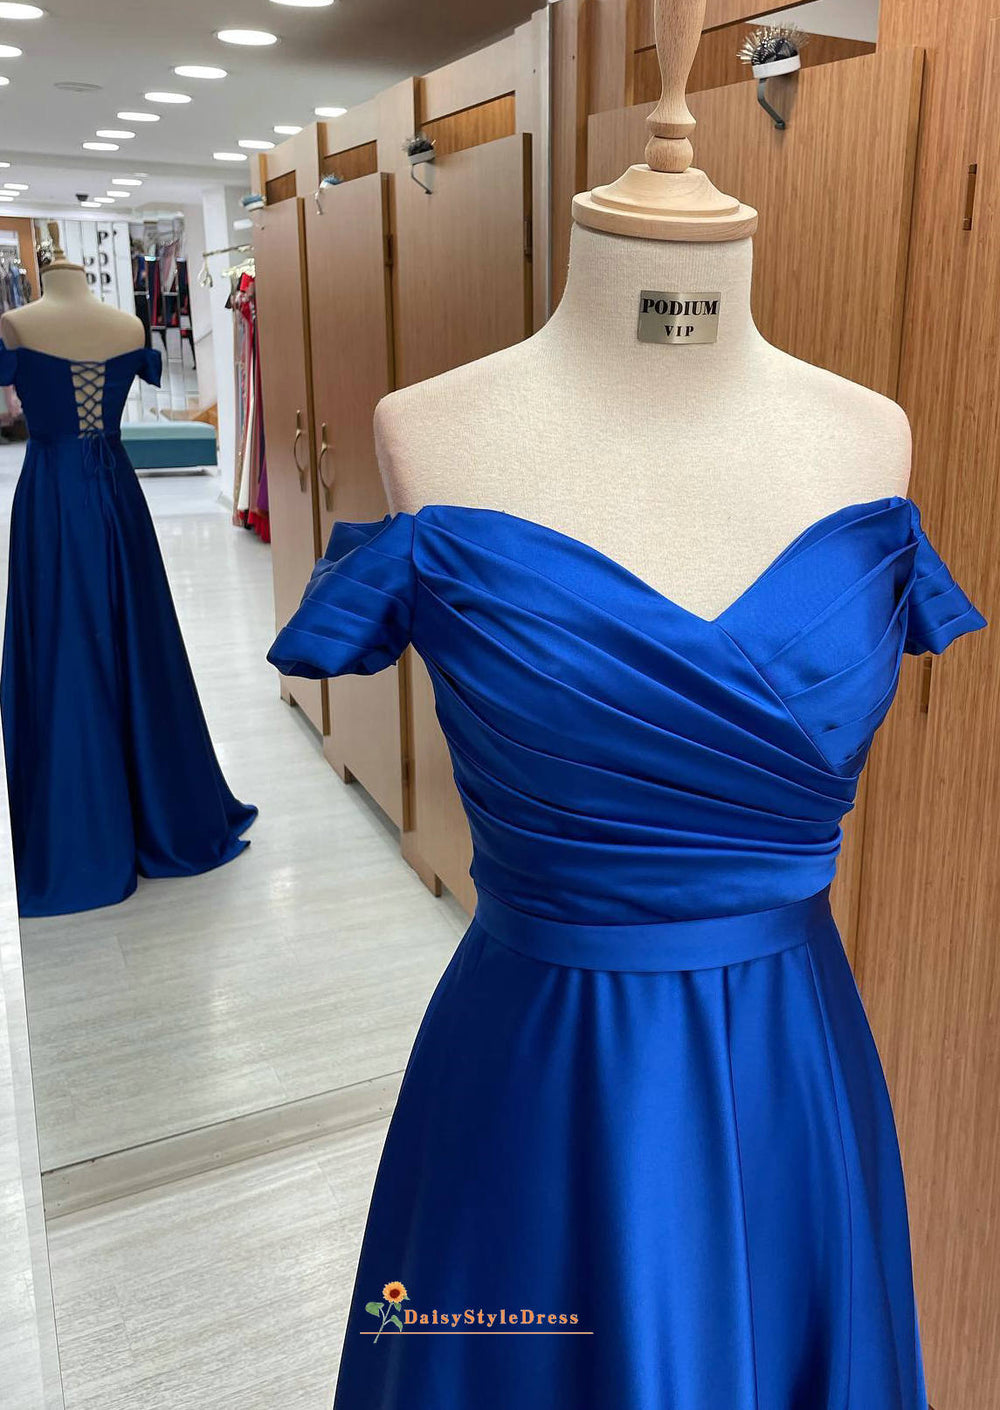 Fashion High Low Light Blue Prom Dress